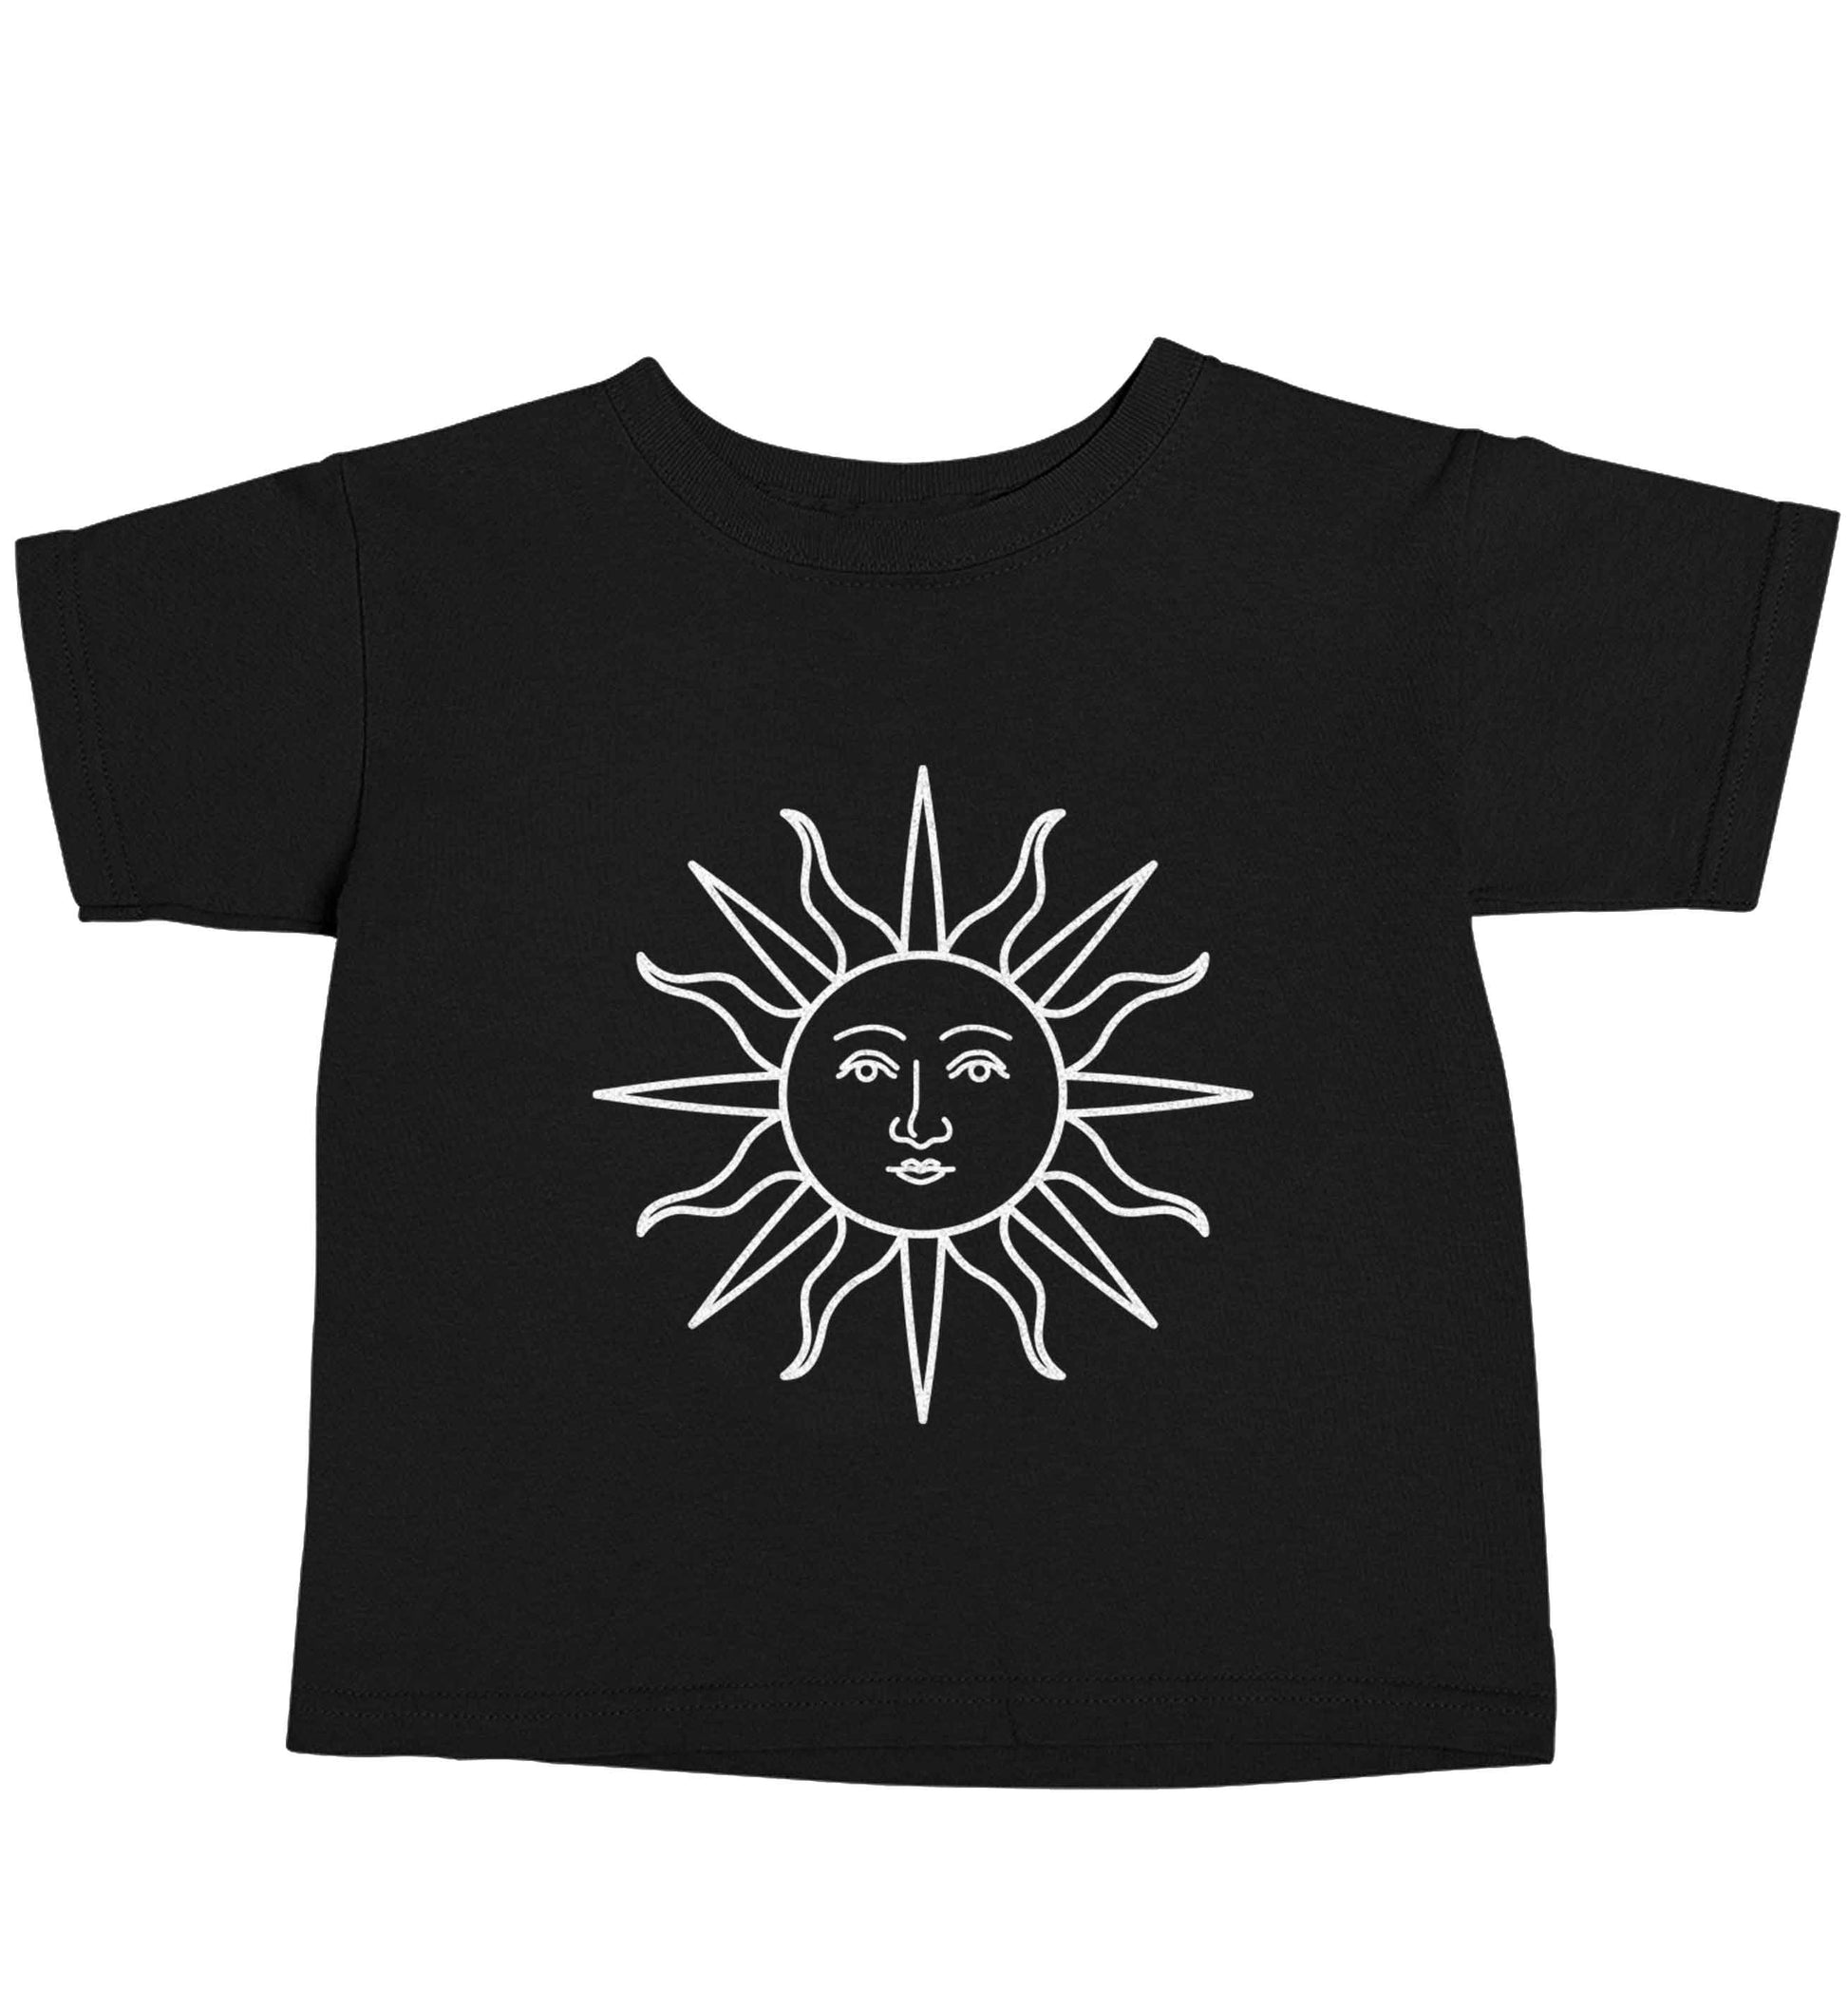 Sun face illustration Black baby toddler Tshirt 2 years